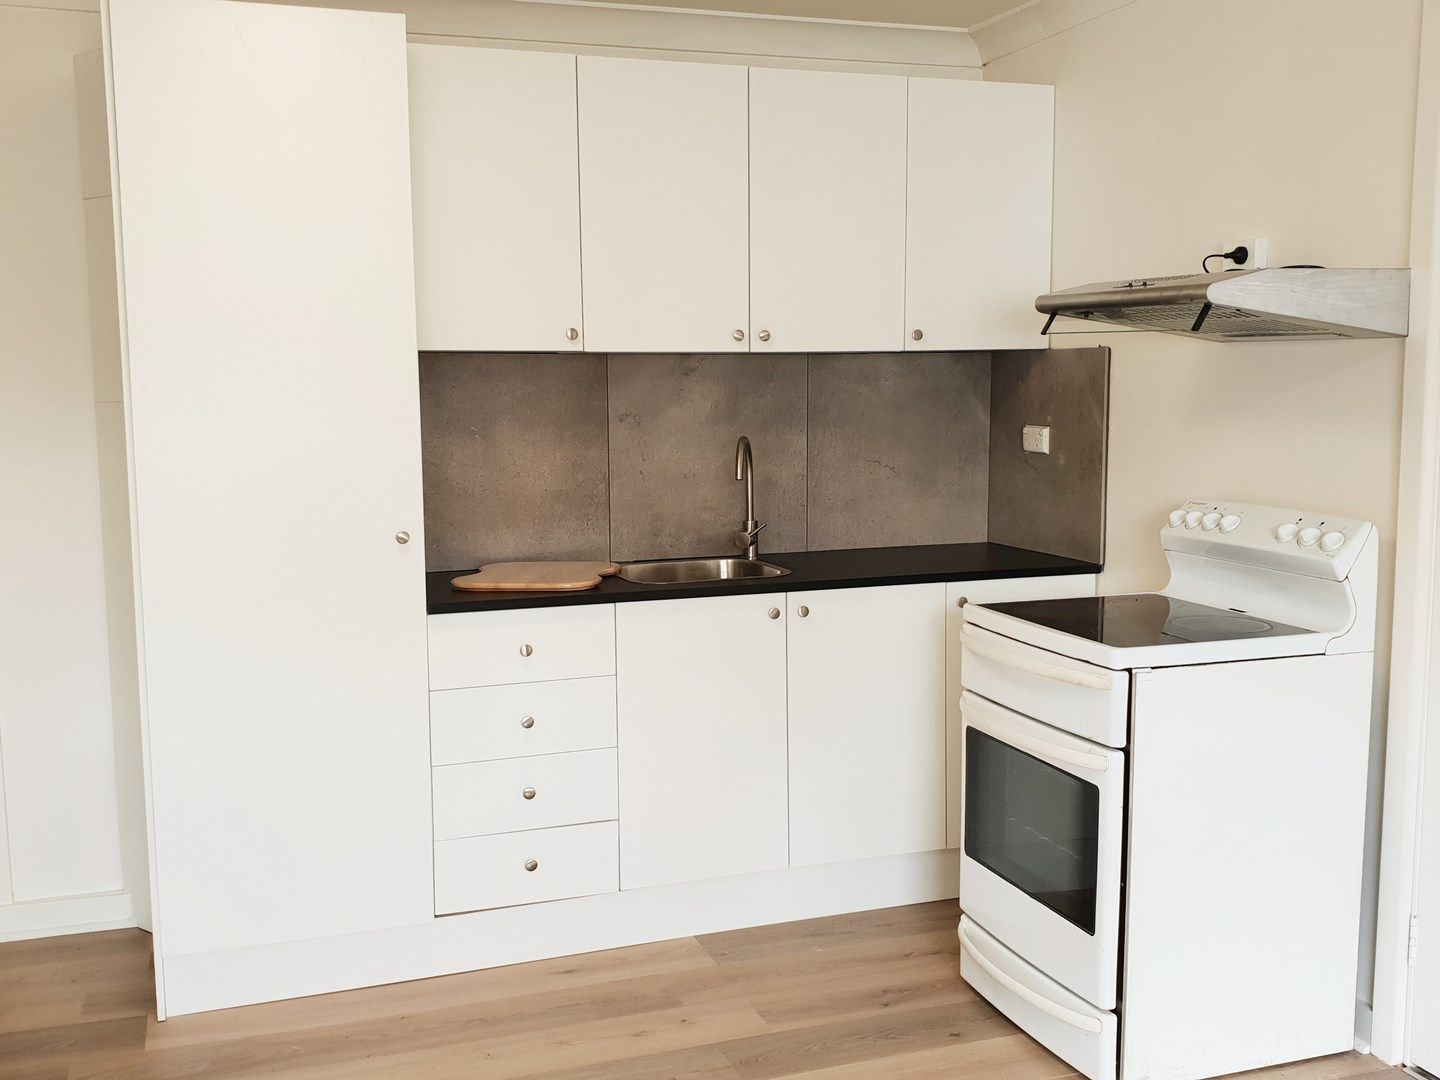 3 bedrooms Apartment / Unit / Flat in 39 Croydon Road HURSTVILLE NSW, 2220